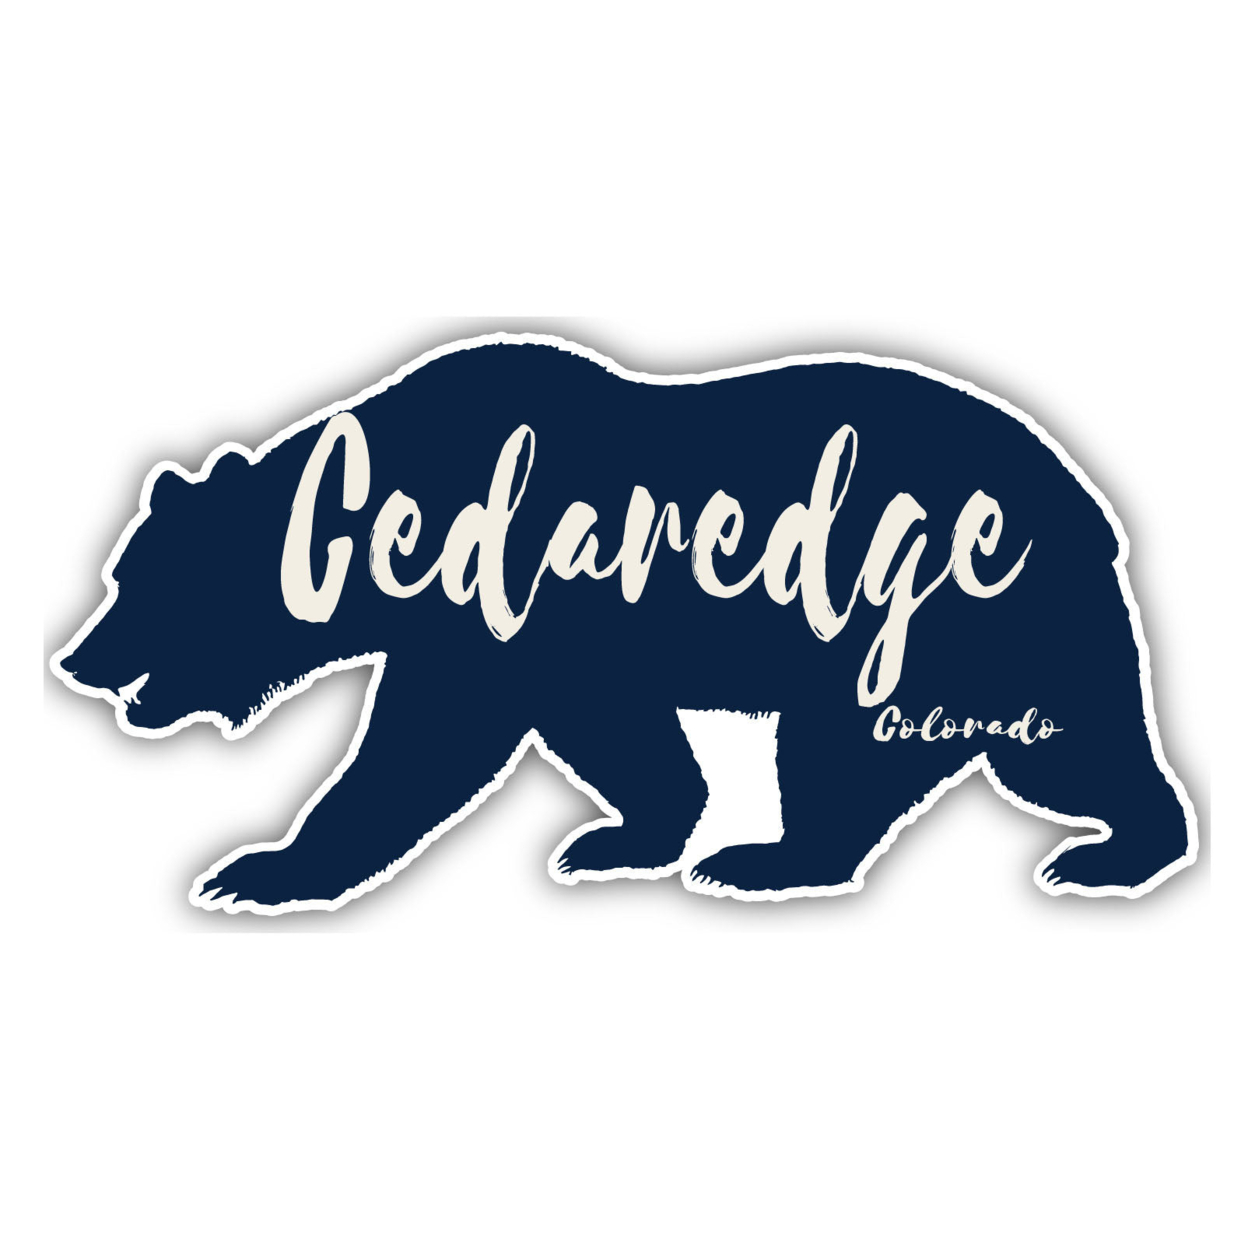 Cedaredge Colorado Souvenir Decorative Stickers (Choose Theme And Size) - Single Unit, 6-Inch, Bear